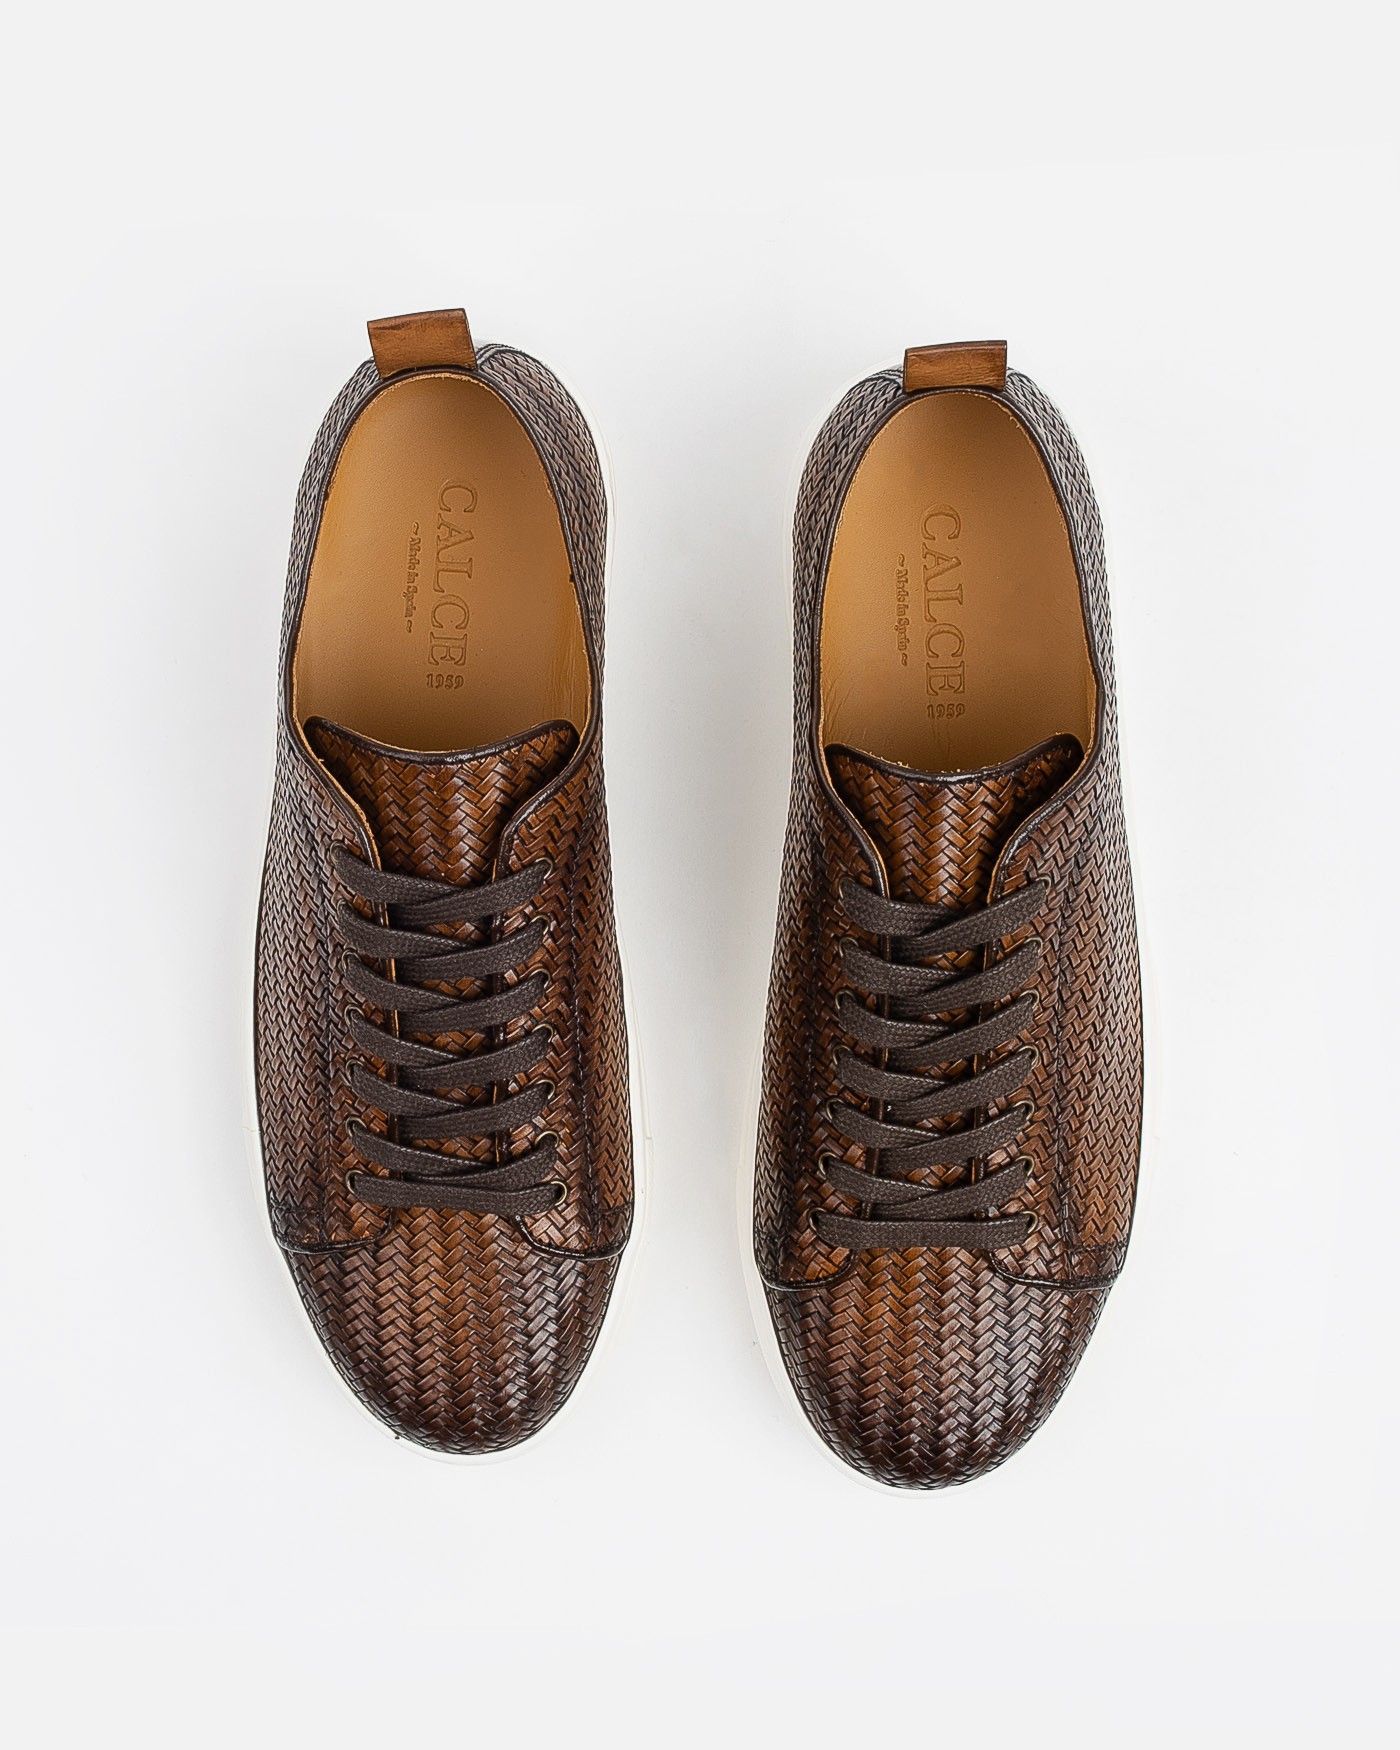 calce-zapatillas-magnum-gold-sneakers-brown-marron (8)